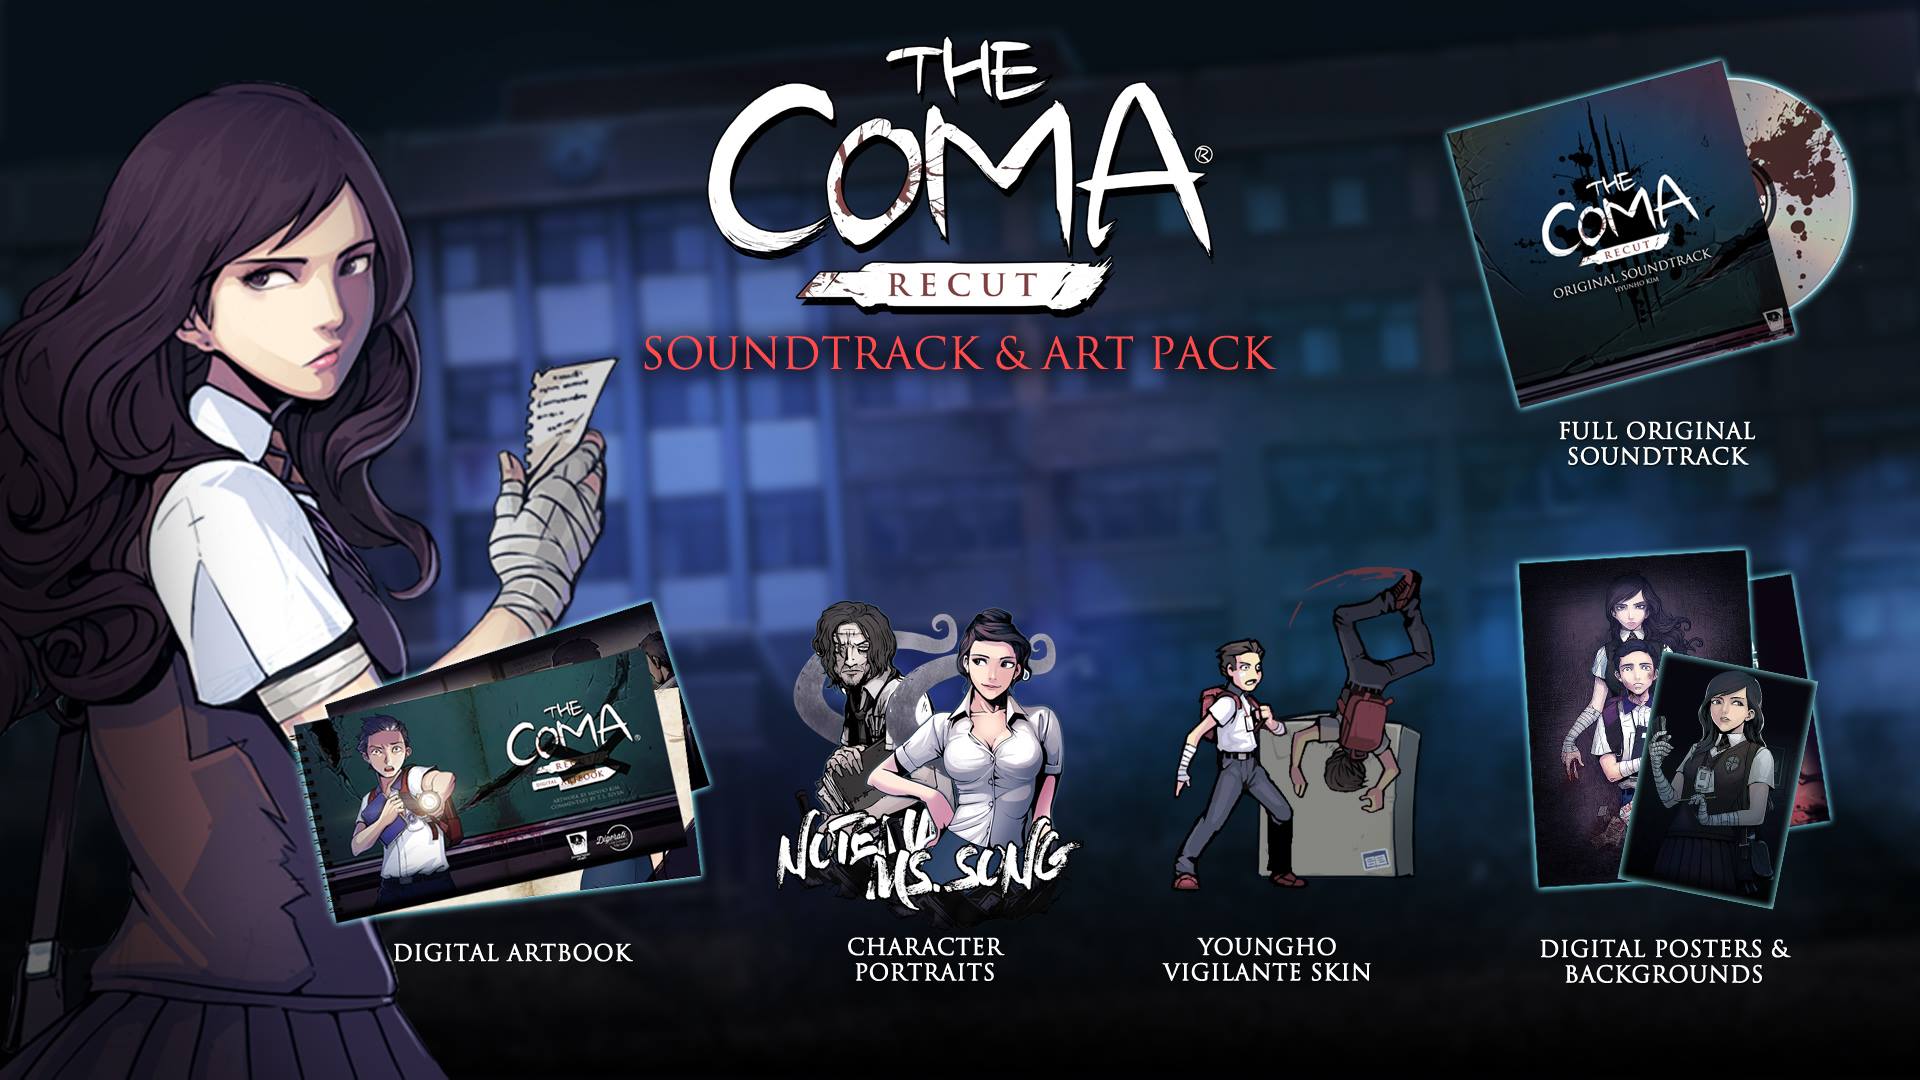 The Coma: Recut - Soundtrack & Art Pack Featured Screenshot #1